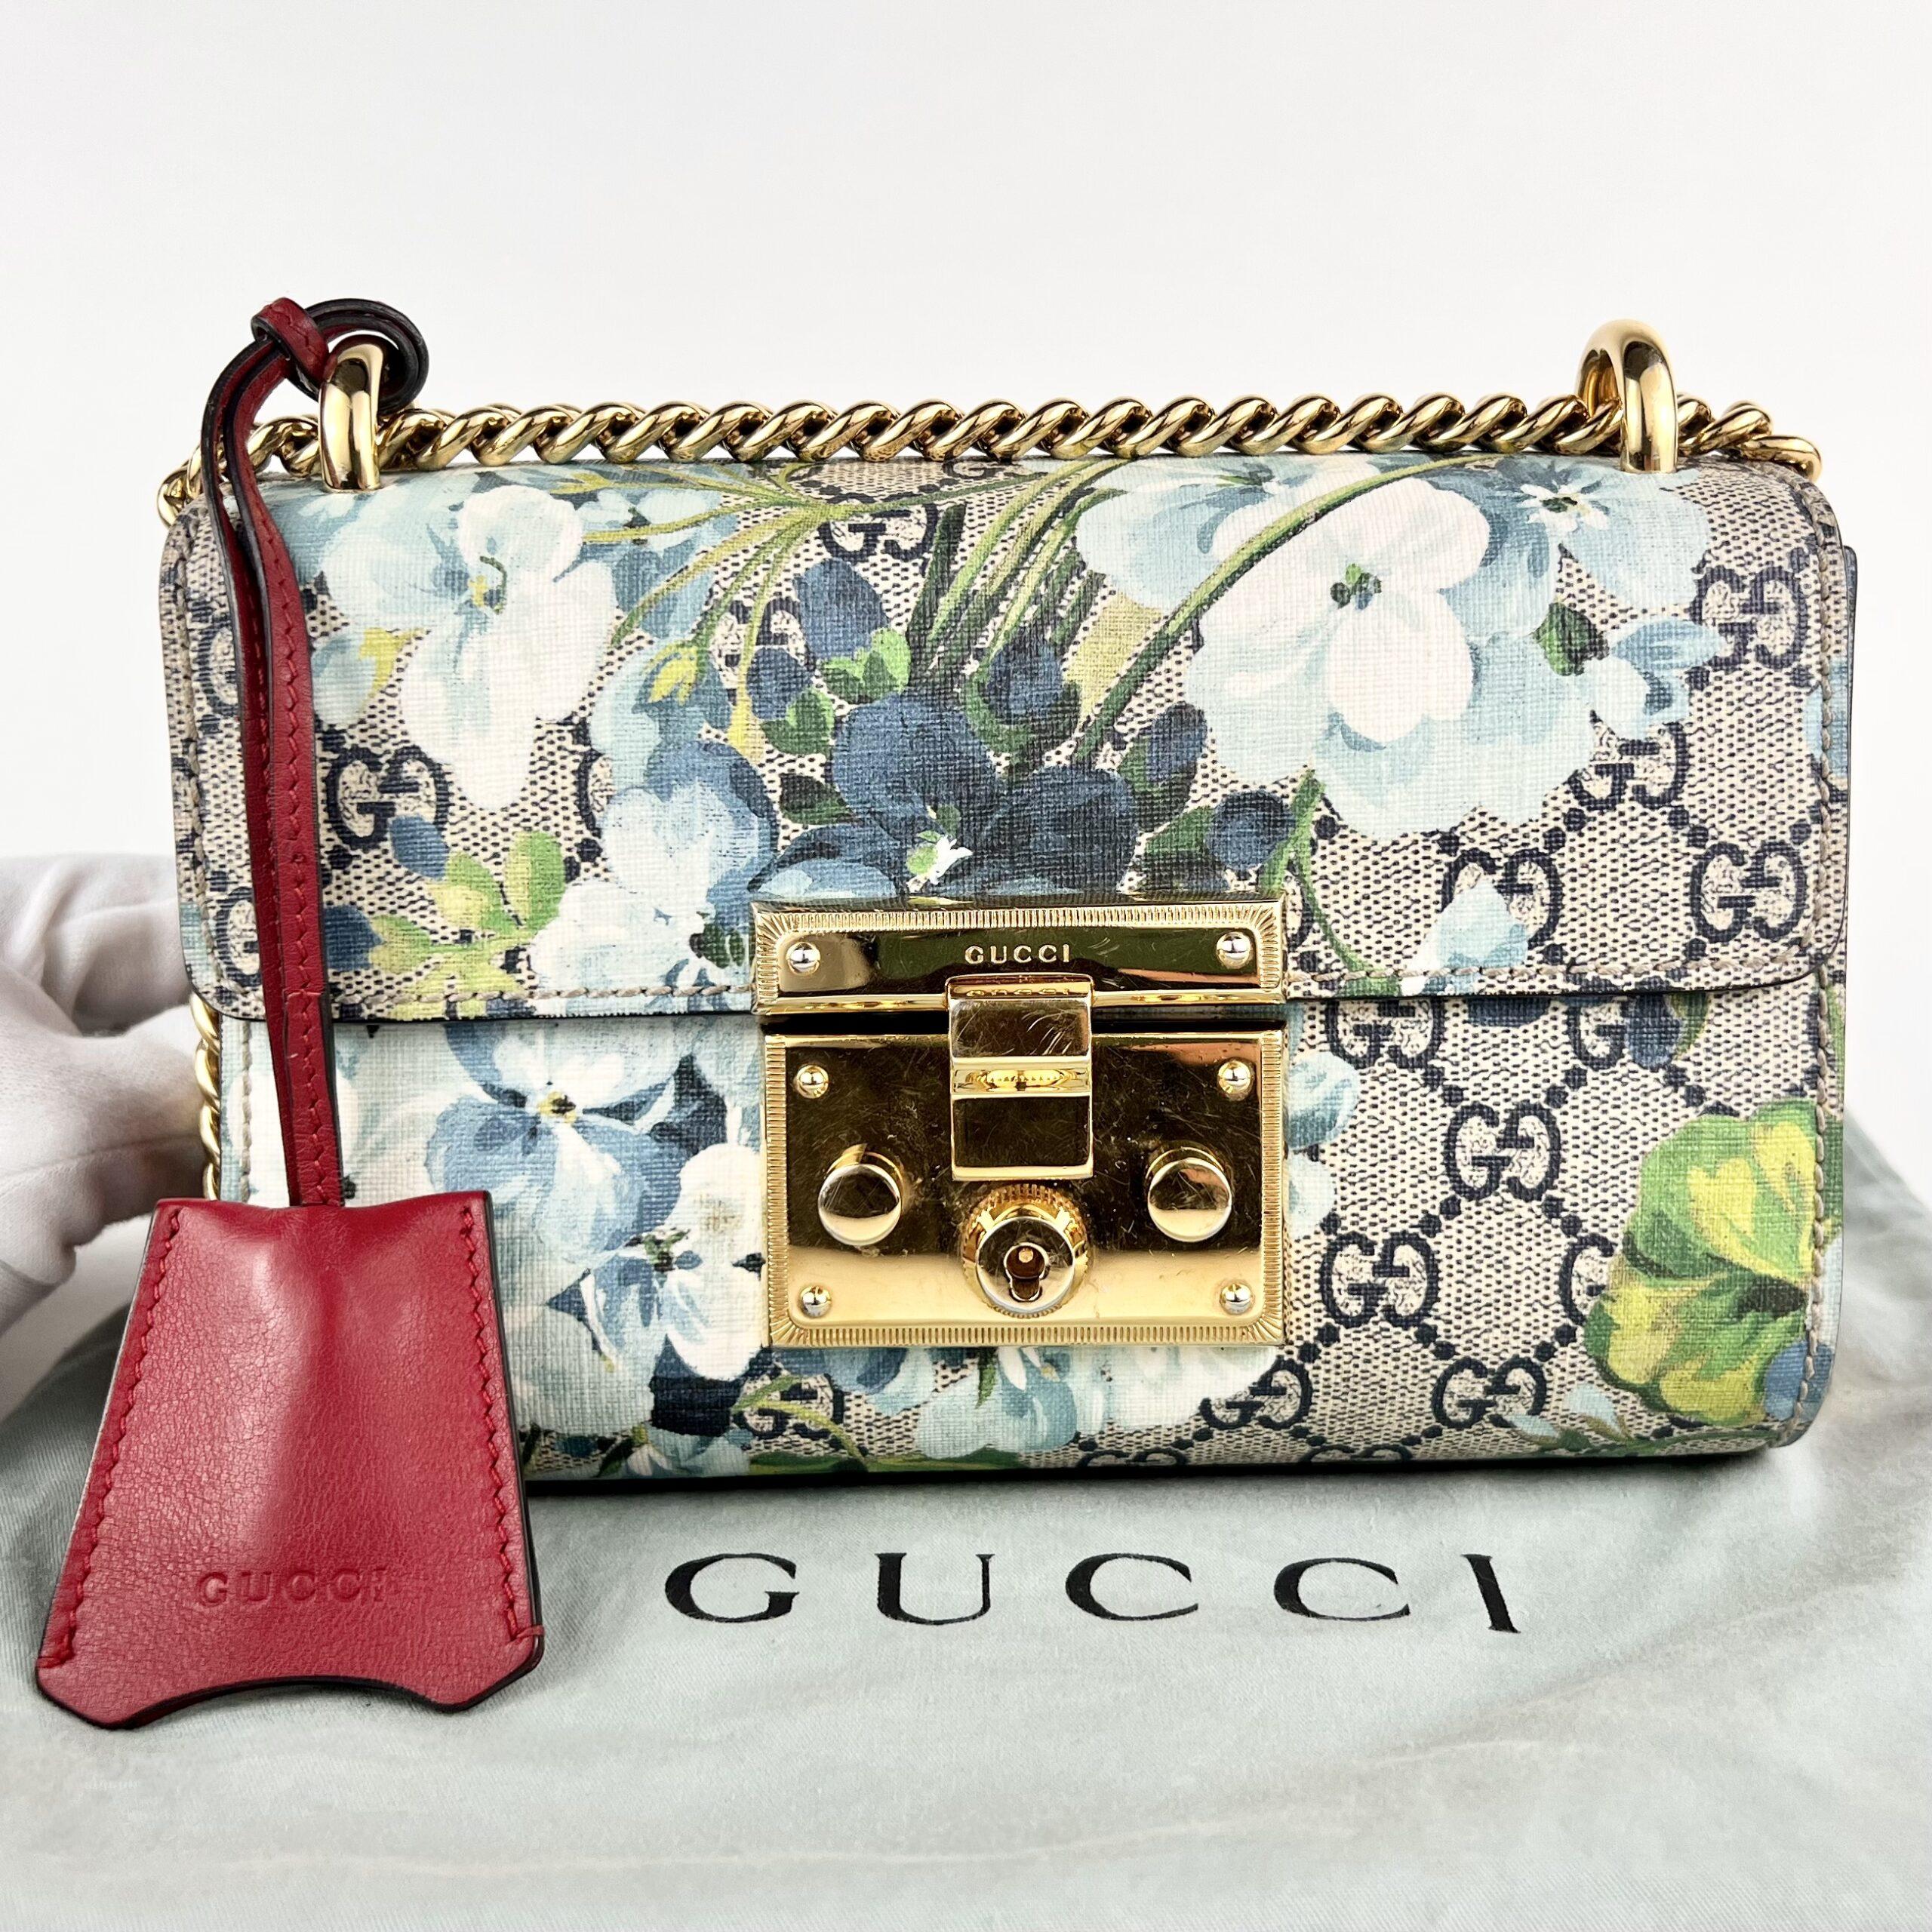 Gucci Padlock Shoulder Bag Auction